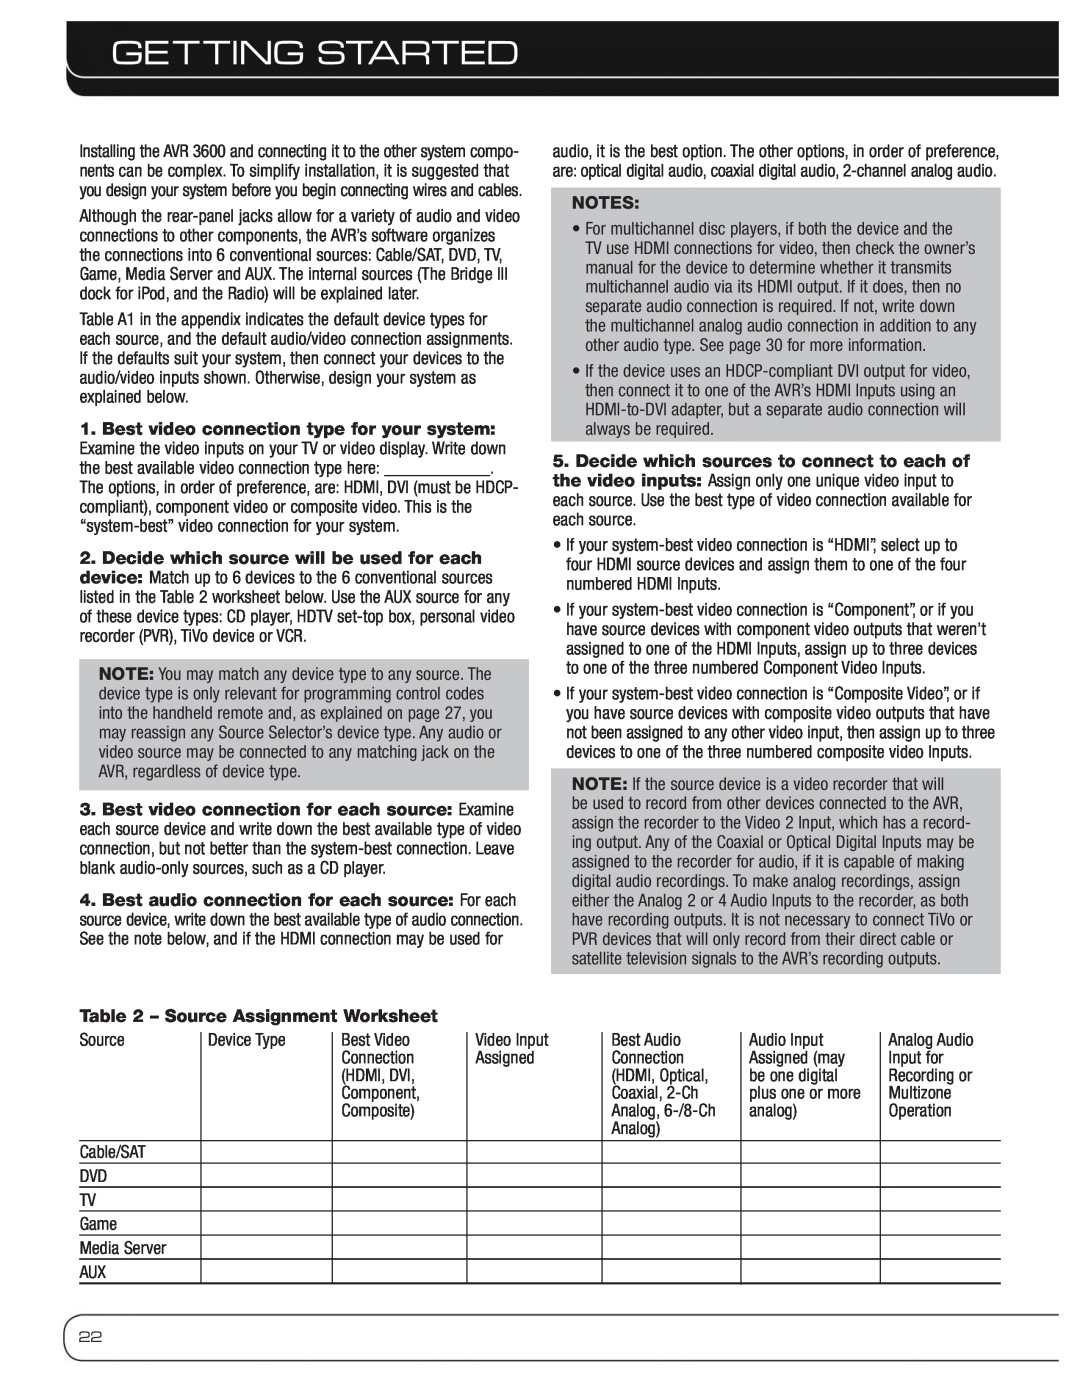 Harman-Kardon AVR 3600 owner manual Getting Started, Source Assignment Worksheet, Notes 